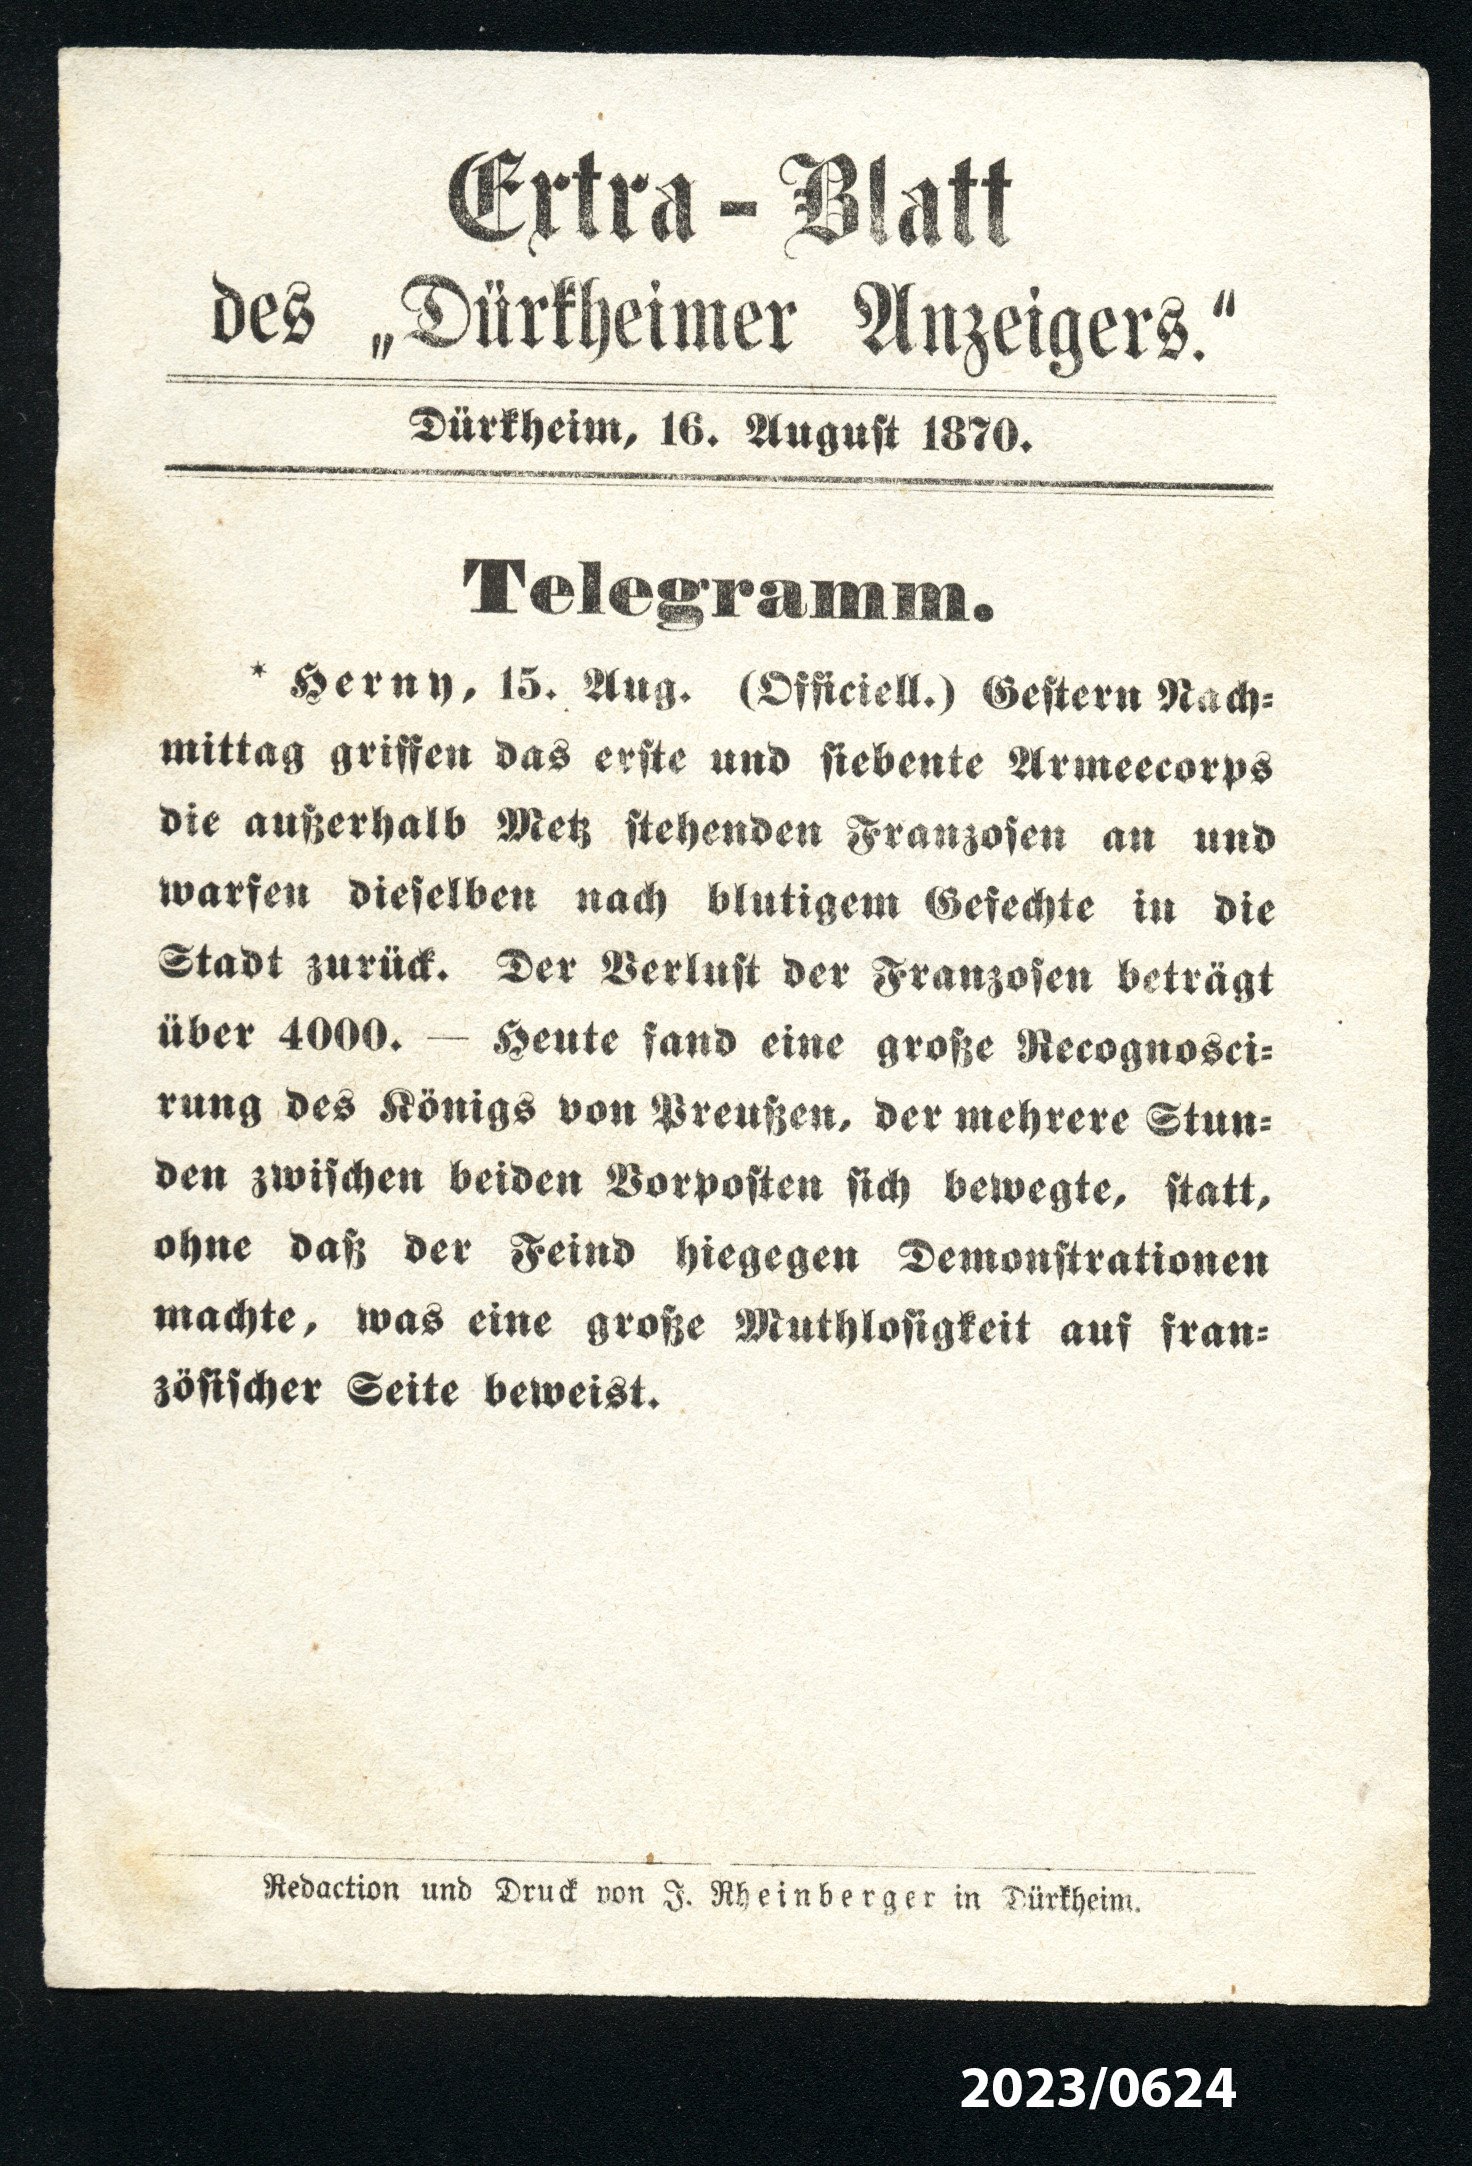 Extra-Blatt des "Dürkheimer Anzeigers" 16.8.1870 (Stadtmuseum Bad Dürkheim im Kulturzentrum Haus Catoir CC BY-NC-SA)